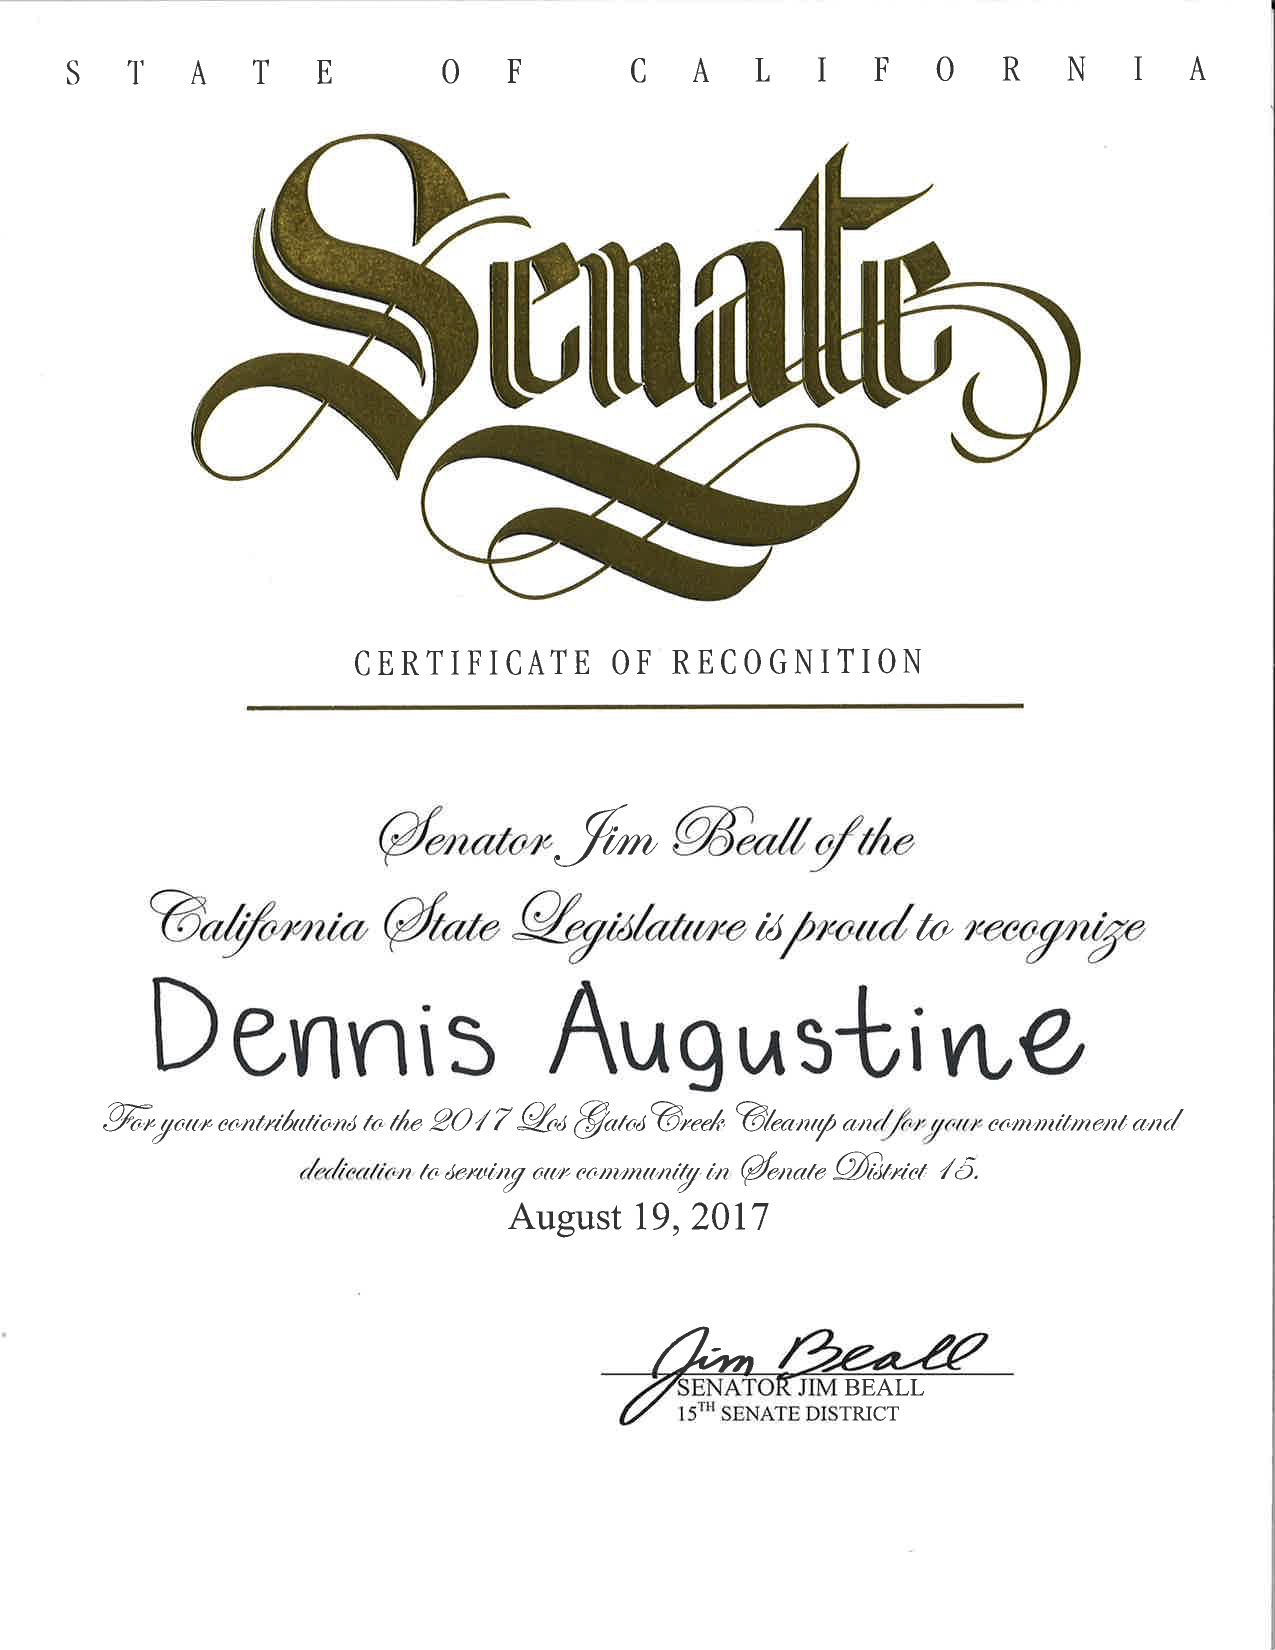 Cert. of Recognition State JPG Senate20170819105214 copy.jpg